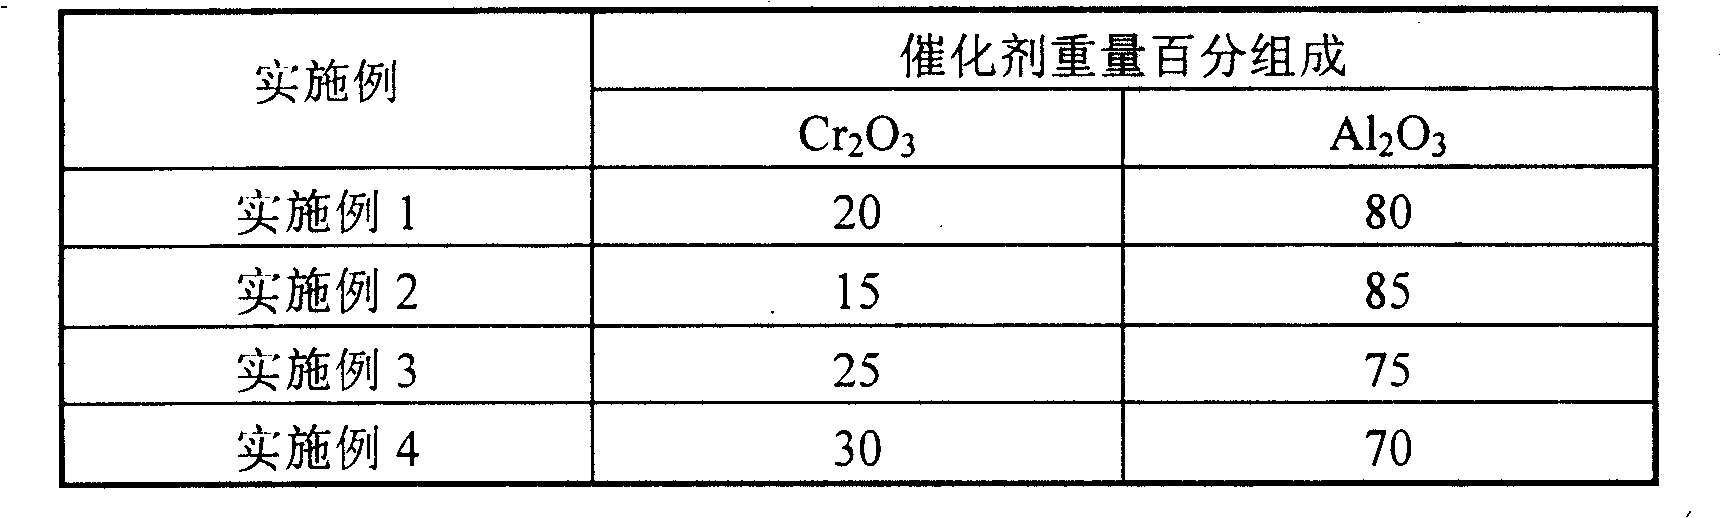 Method for preparing phenethylene through dehydrogenation of ethyl benzene